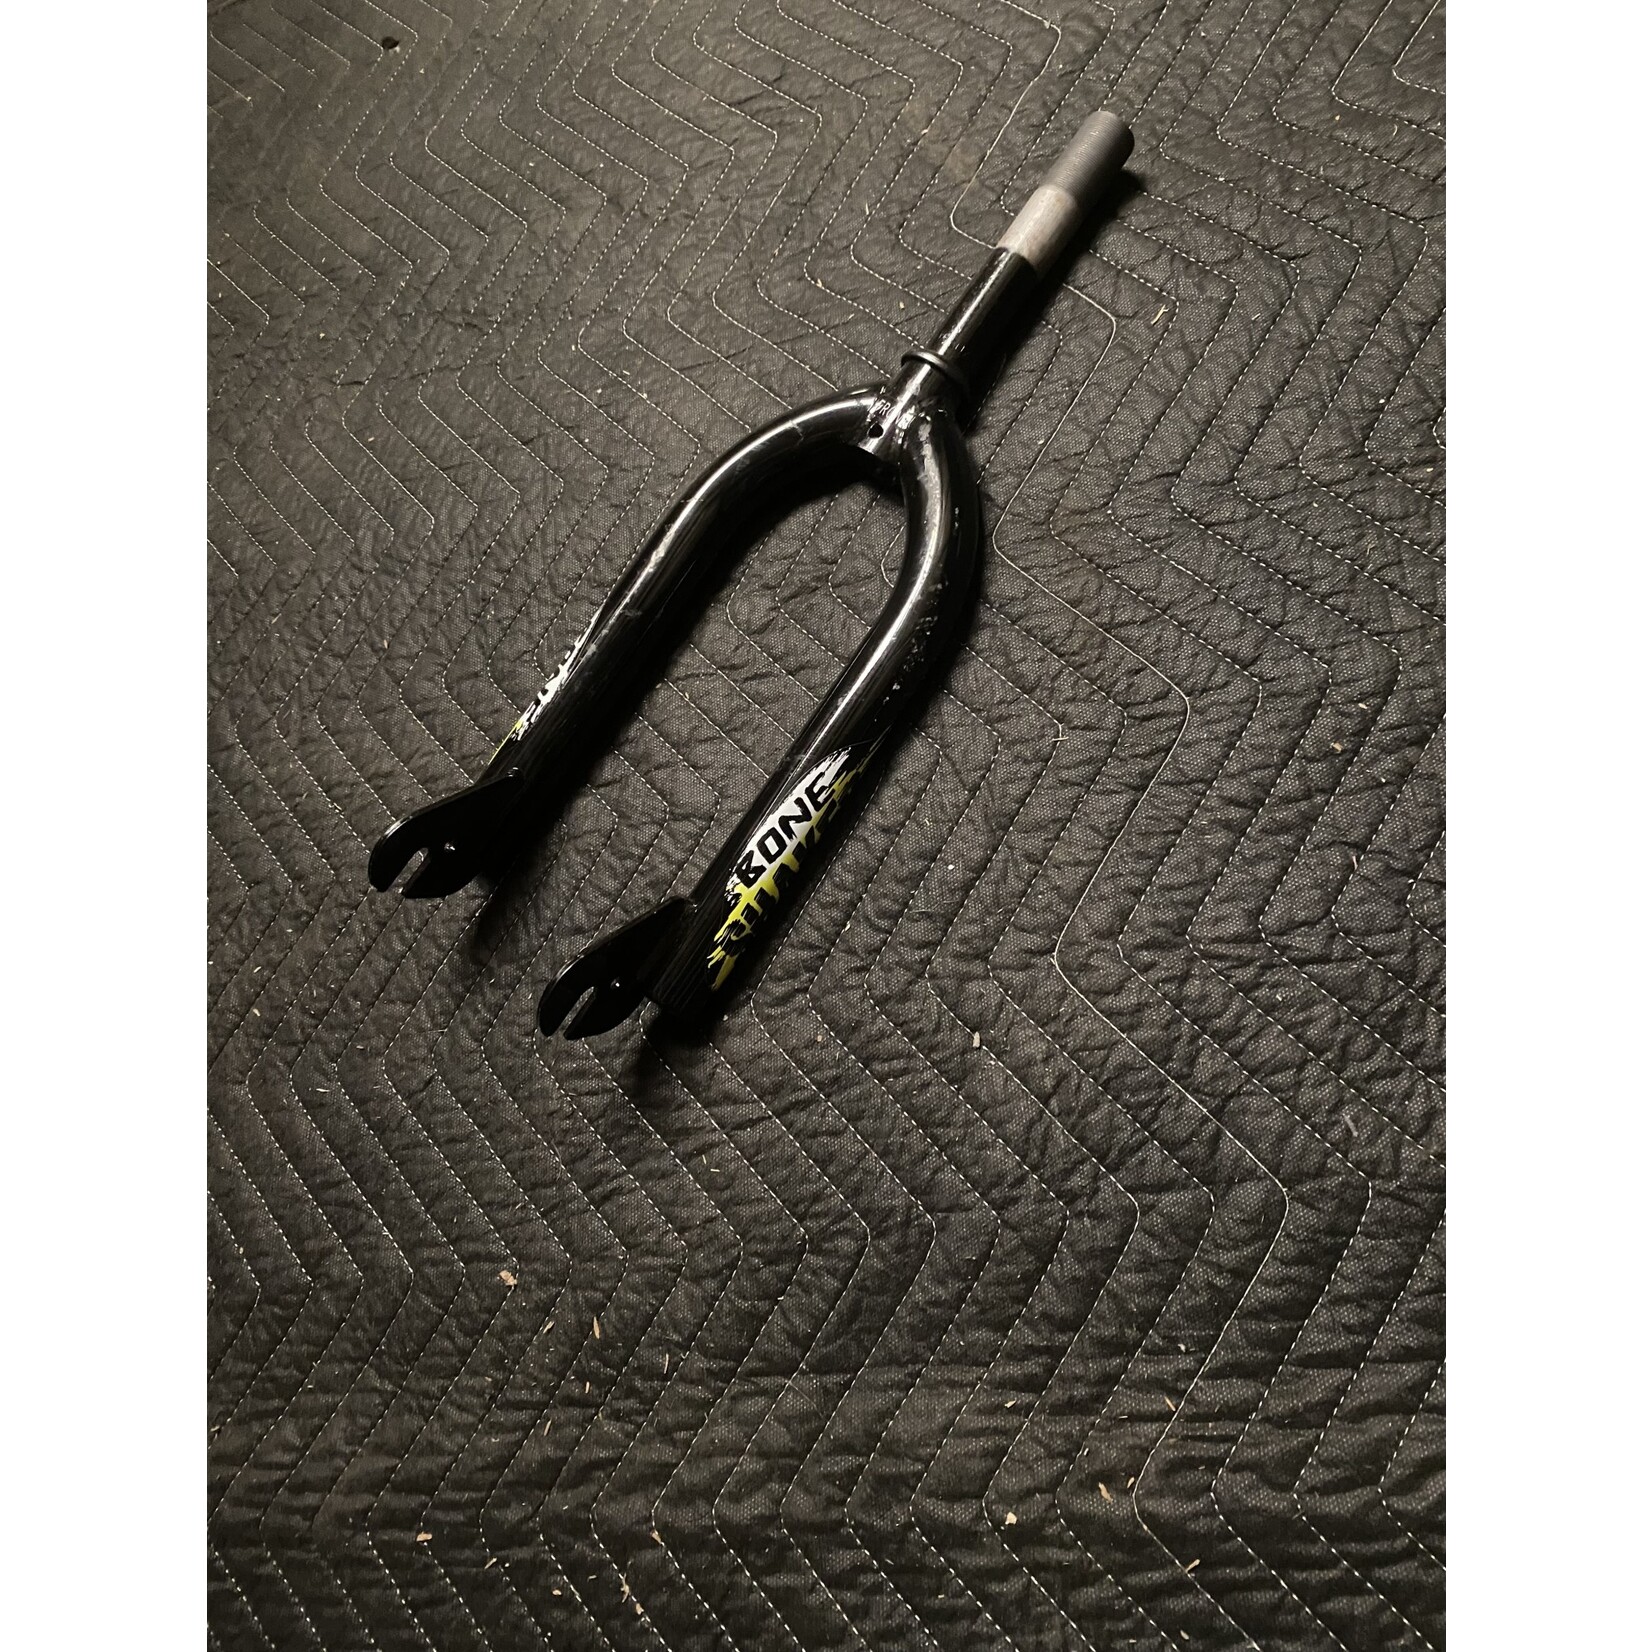 Bone Shaker 1” x 5 1/2” Threaded 18” Bicycle Fork (Black/Yellow)